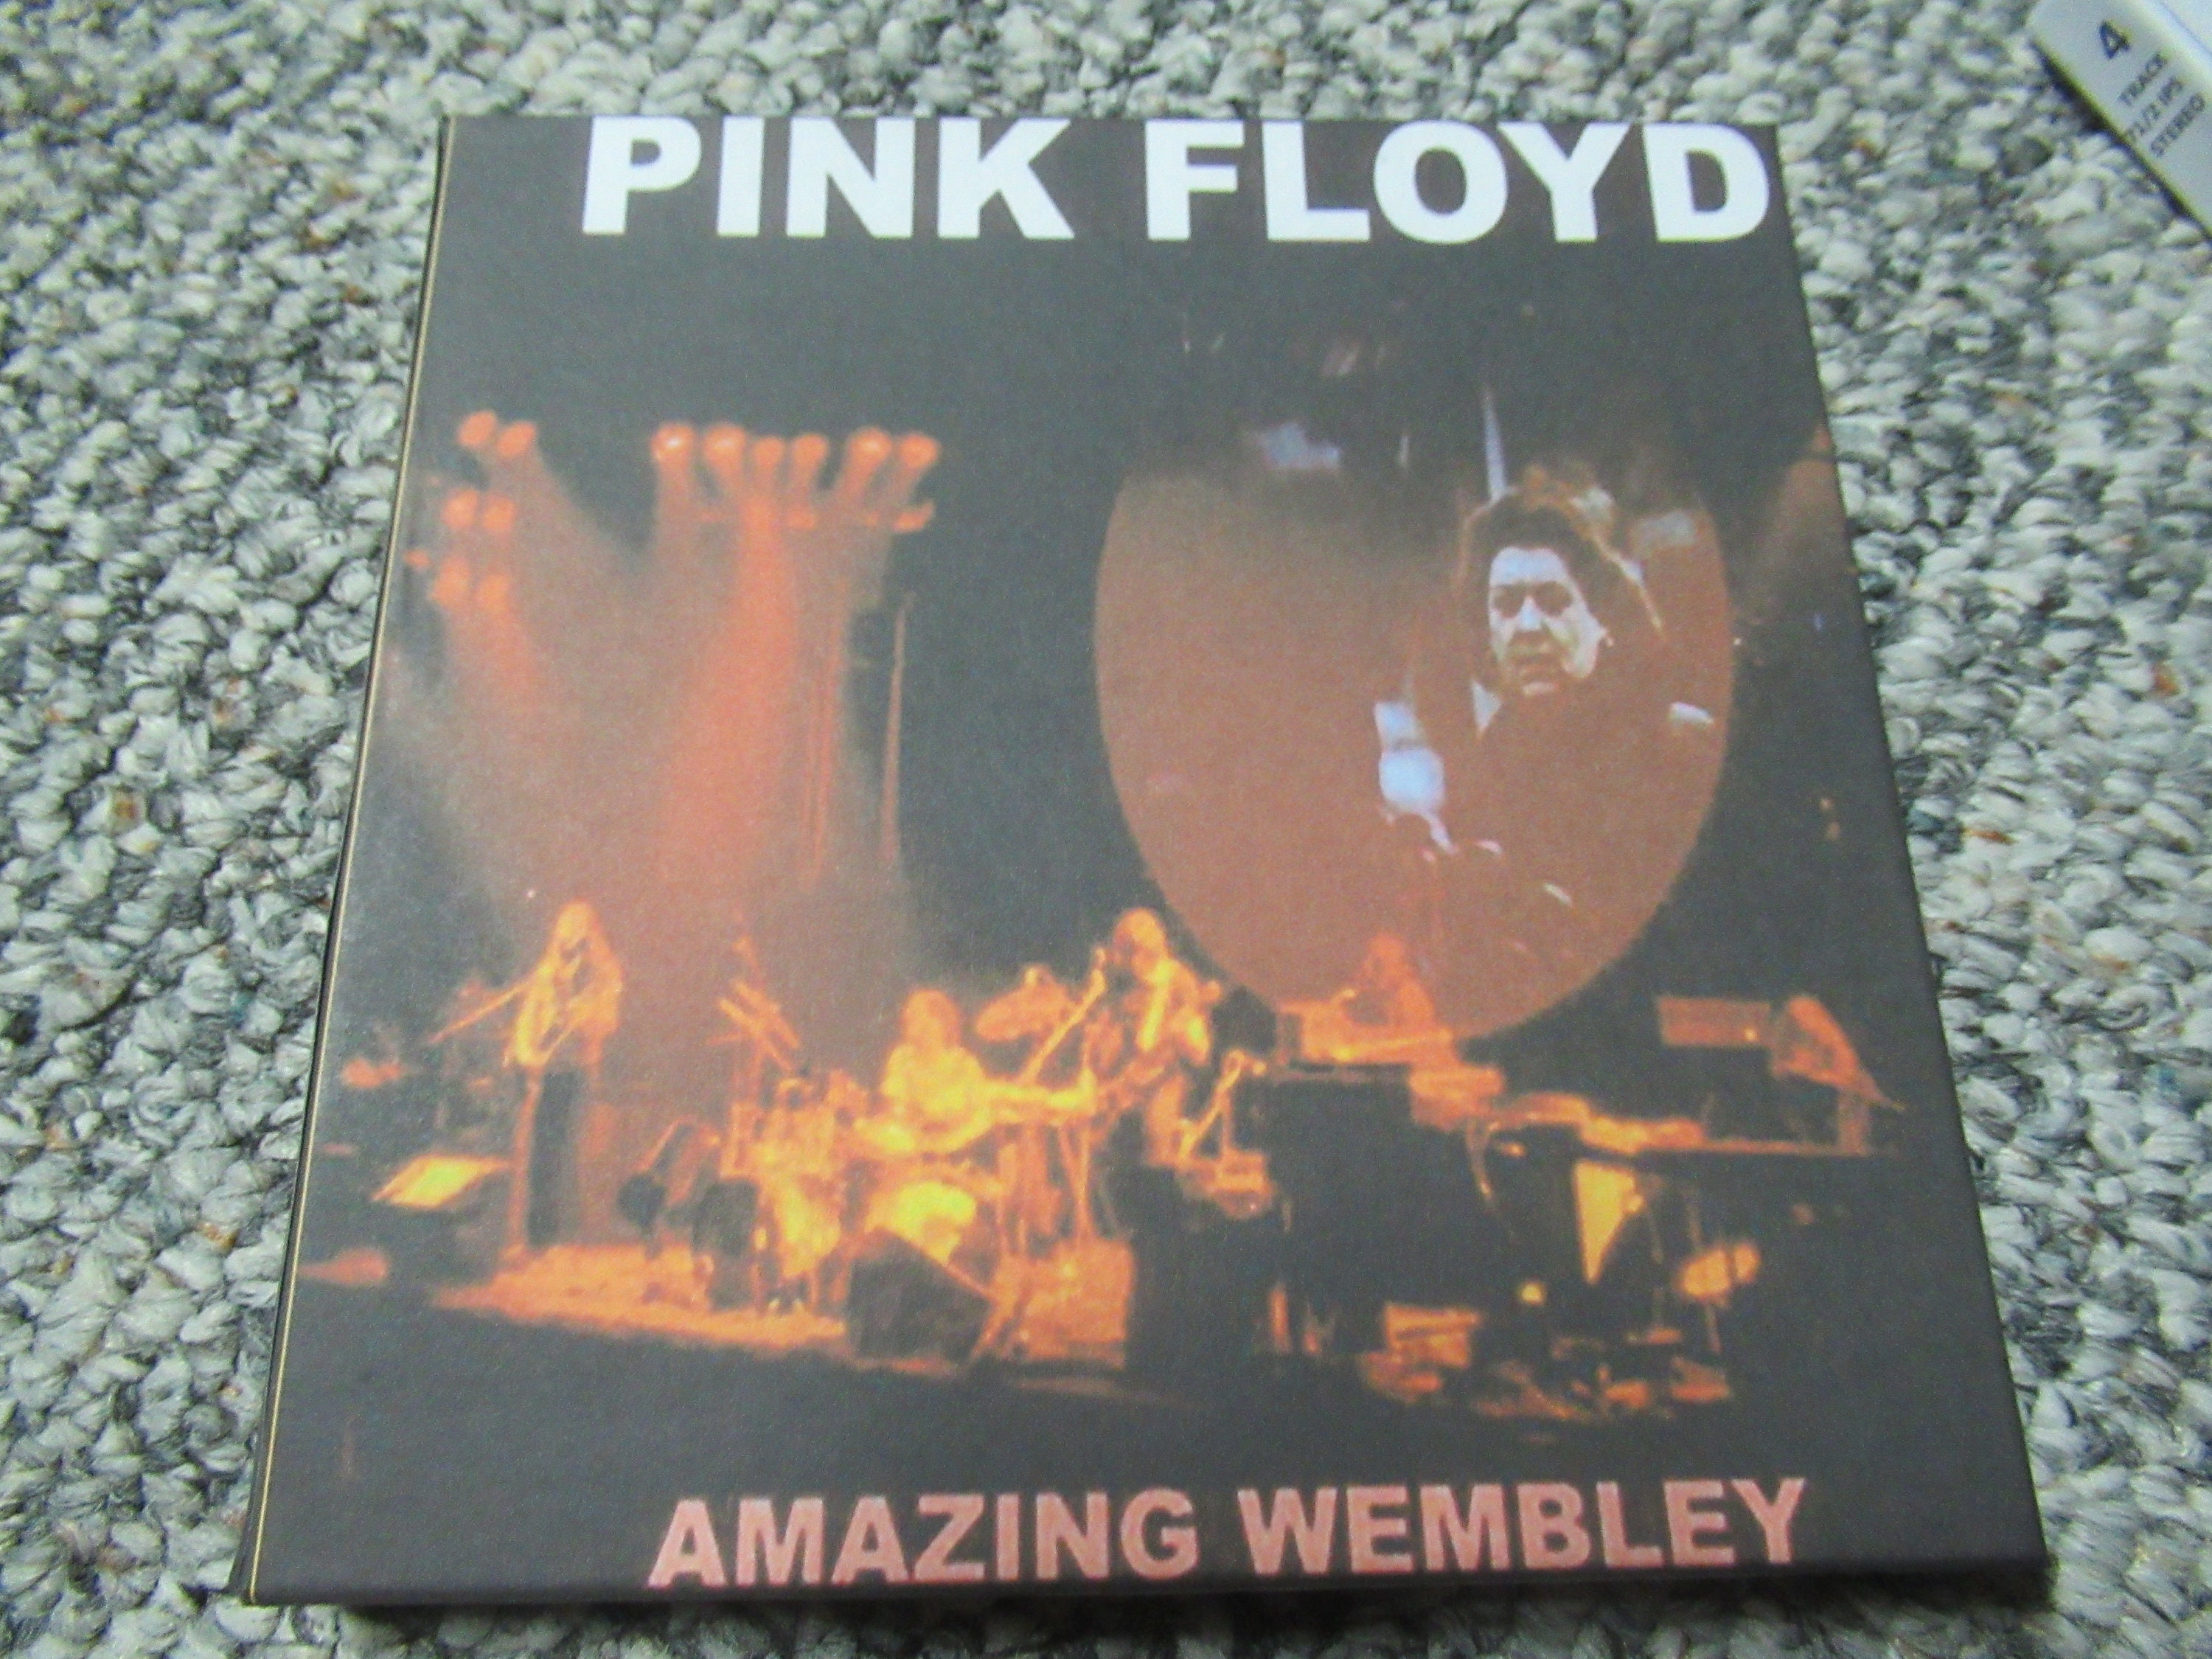 Pink Floyd Live at Wembley 71/2 IPS 4track Reel to Reel Tape 